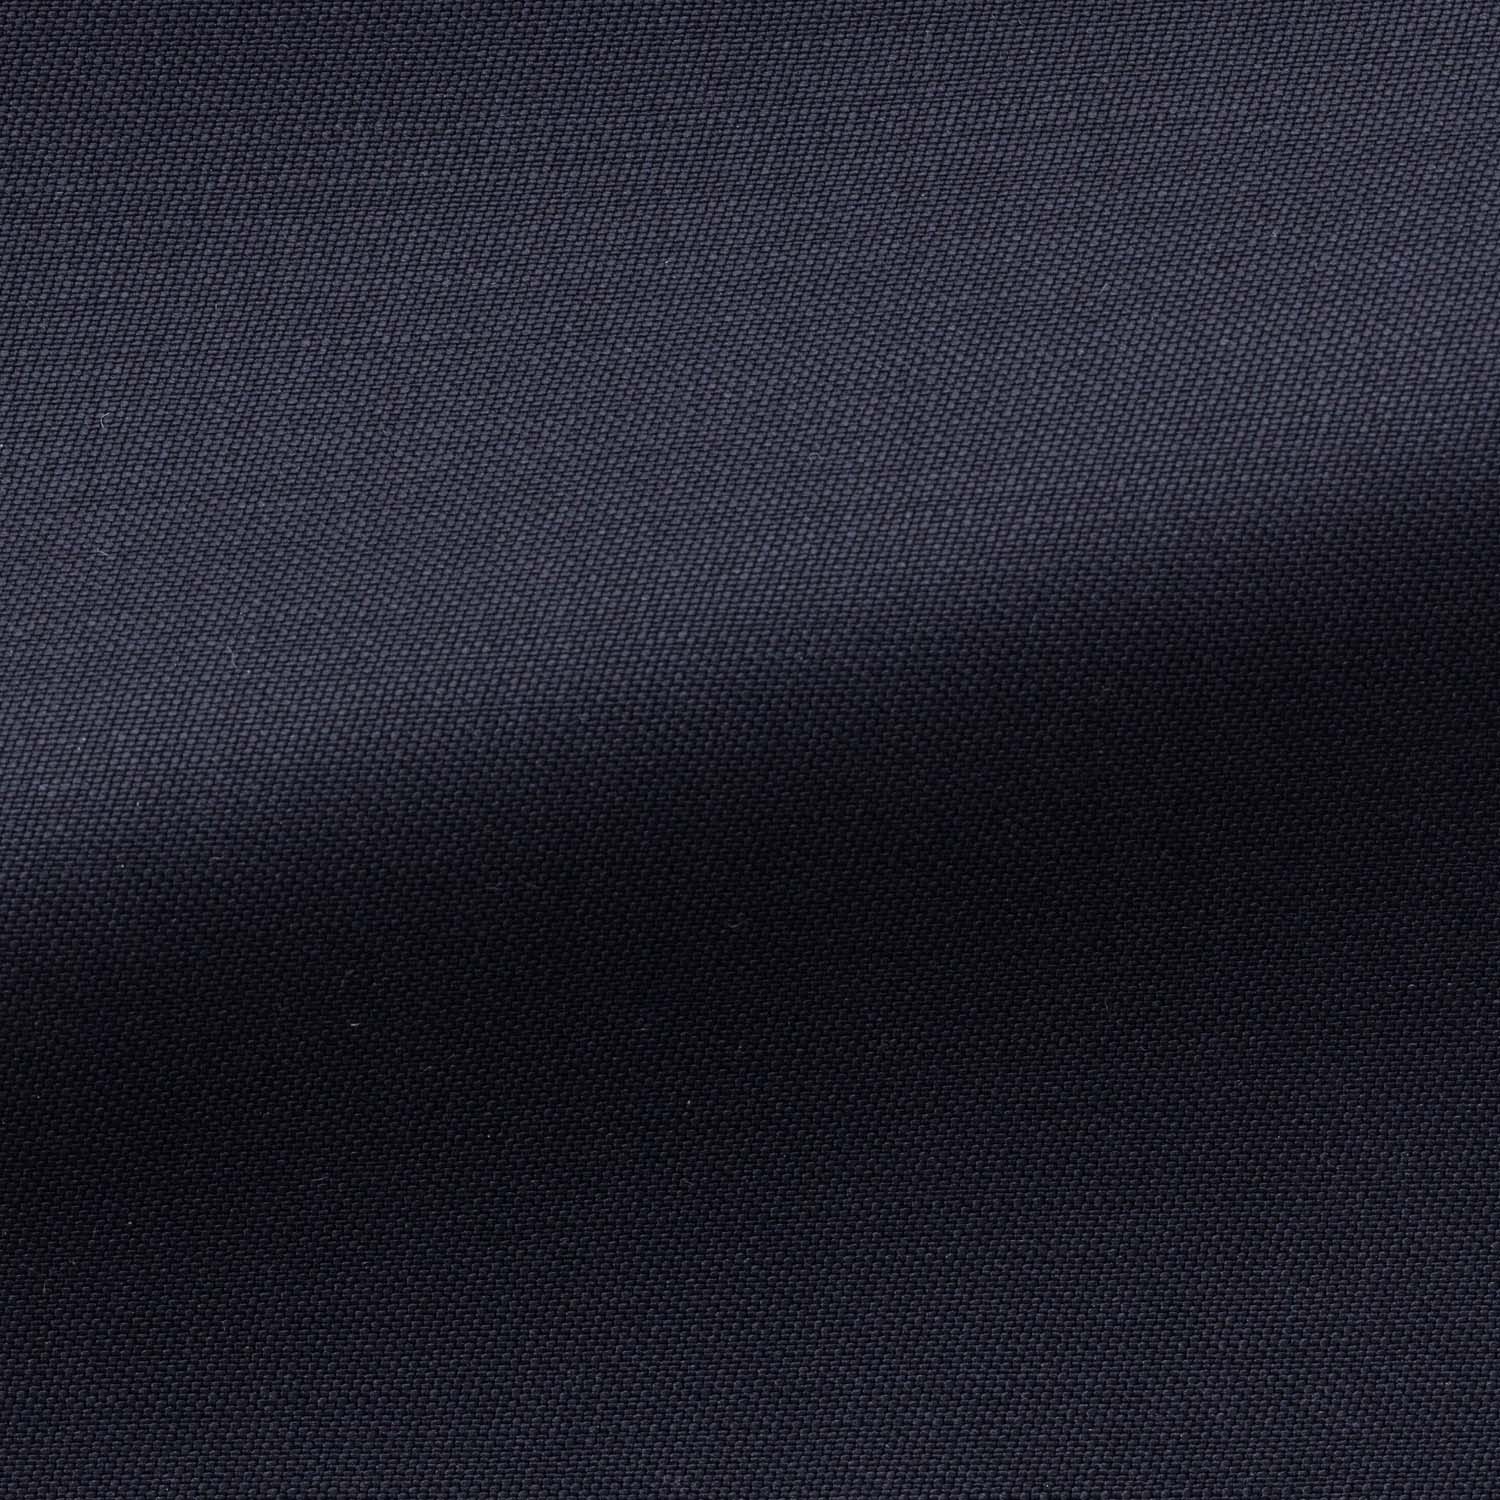 TUX001 Fabric Sample image 1